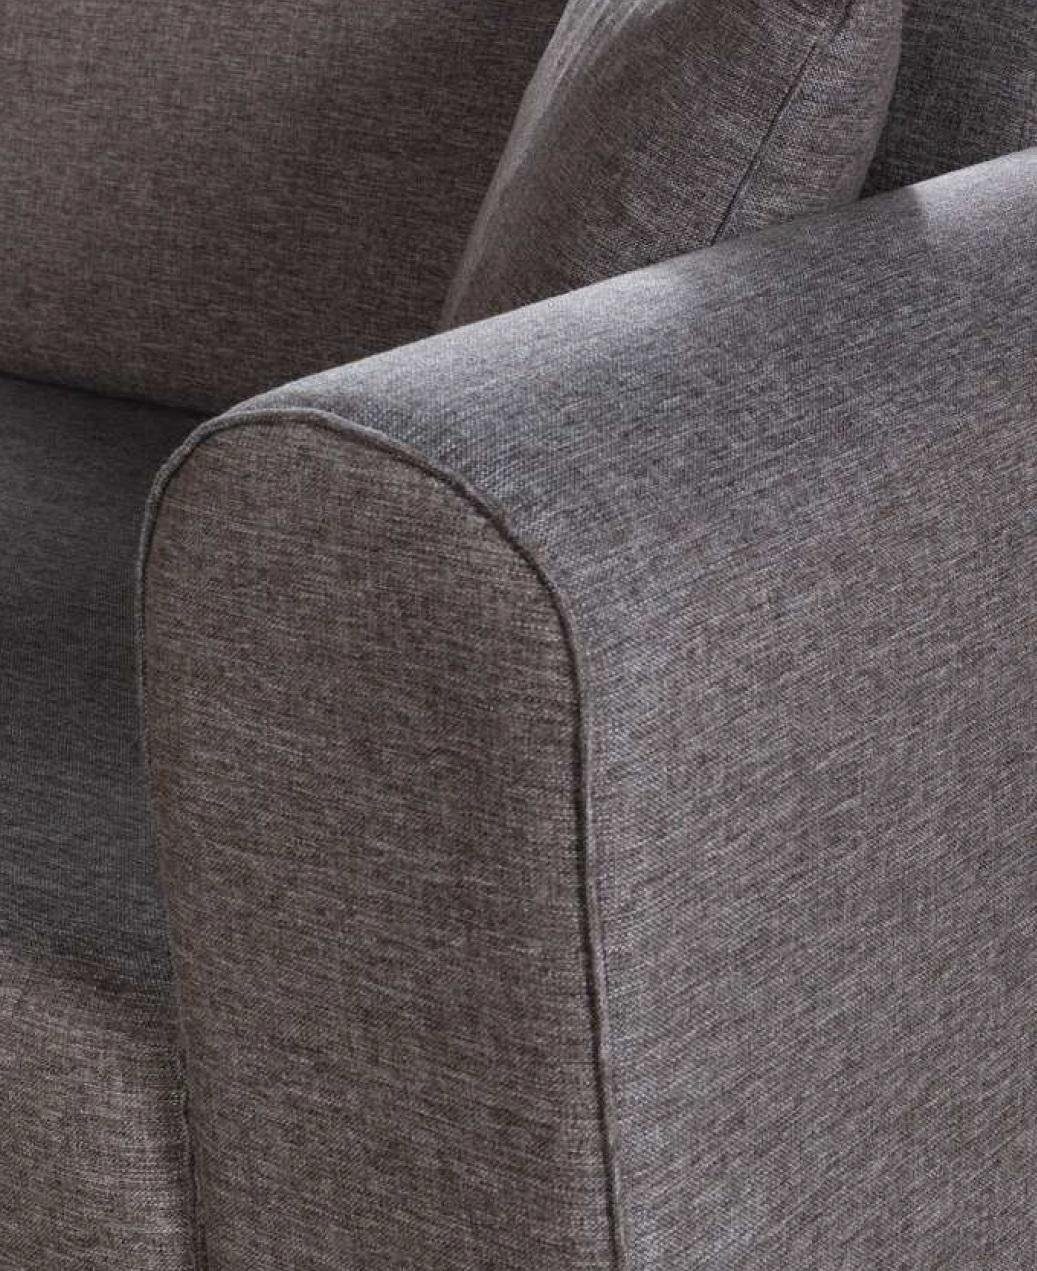 JVmoebel Sofa Sofa Design Polster Sitz Italien Couchen Design Dreisitzer 3